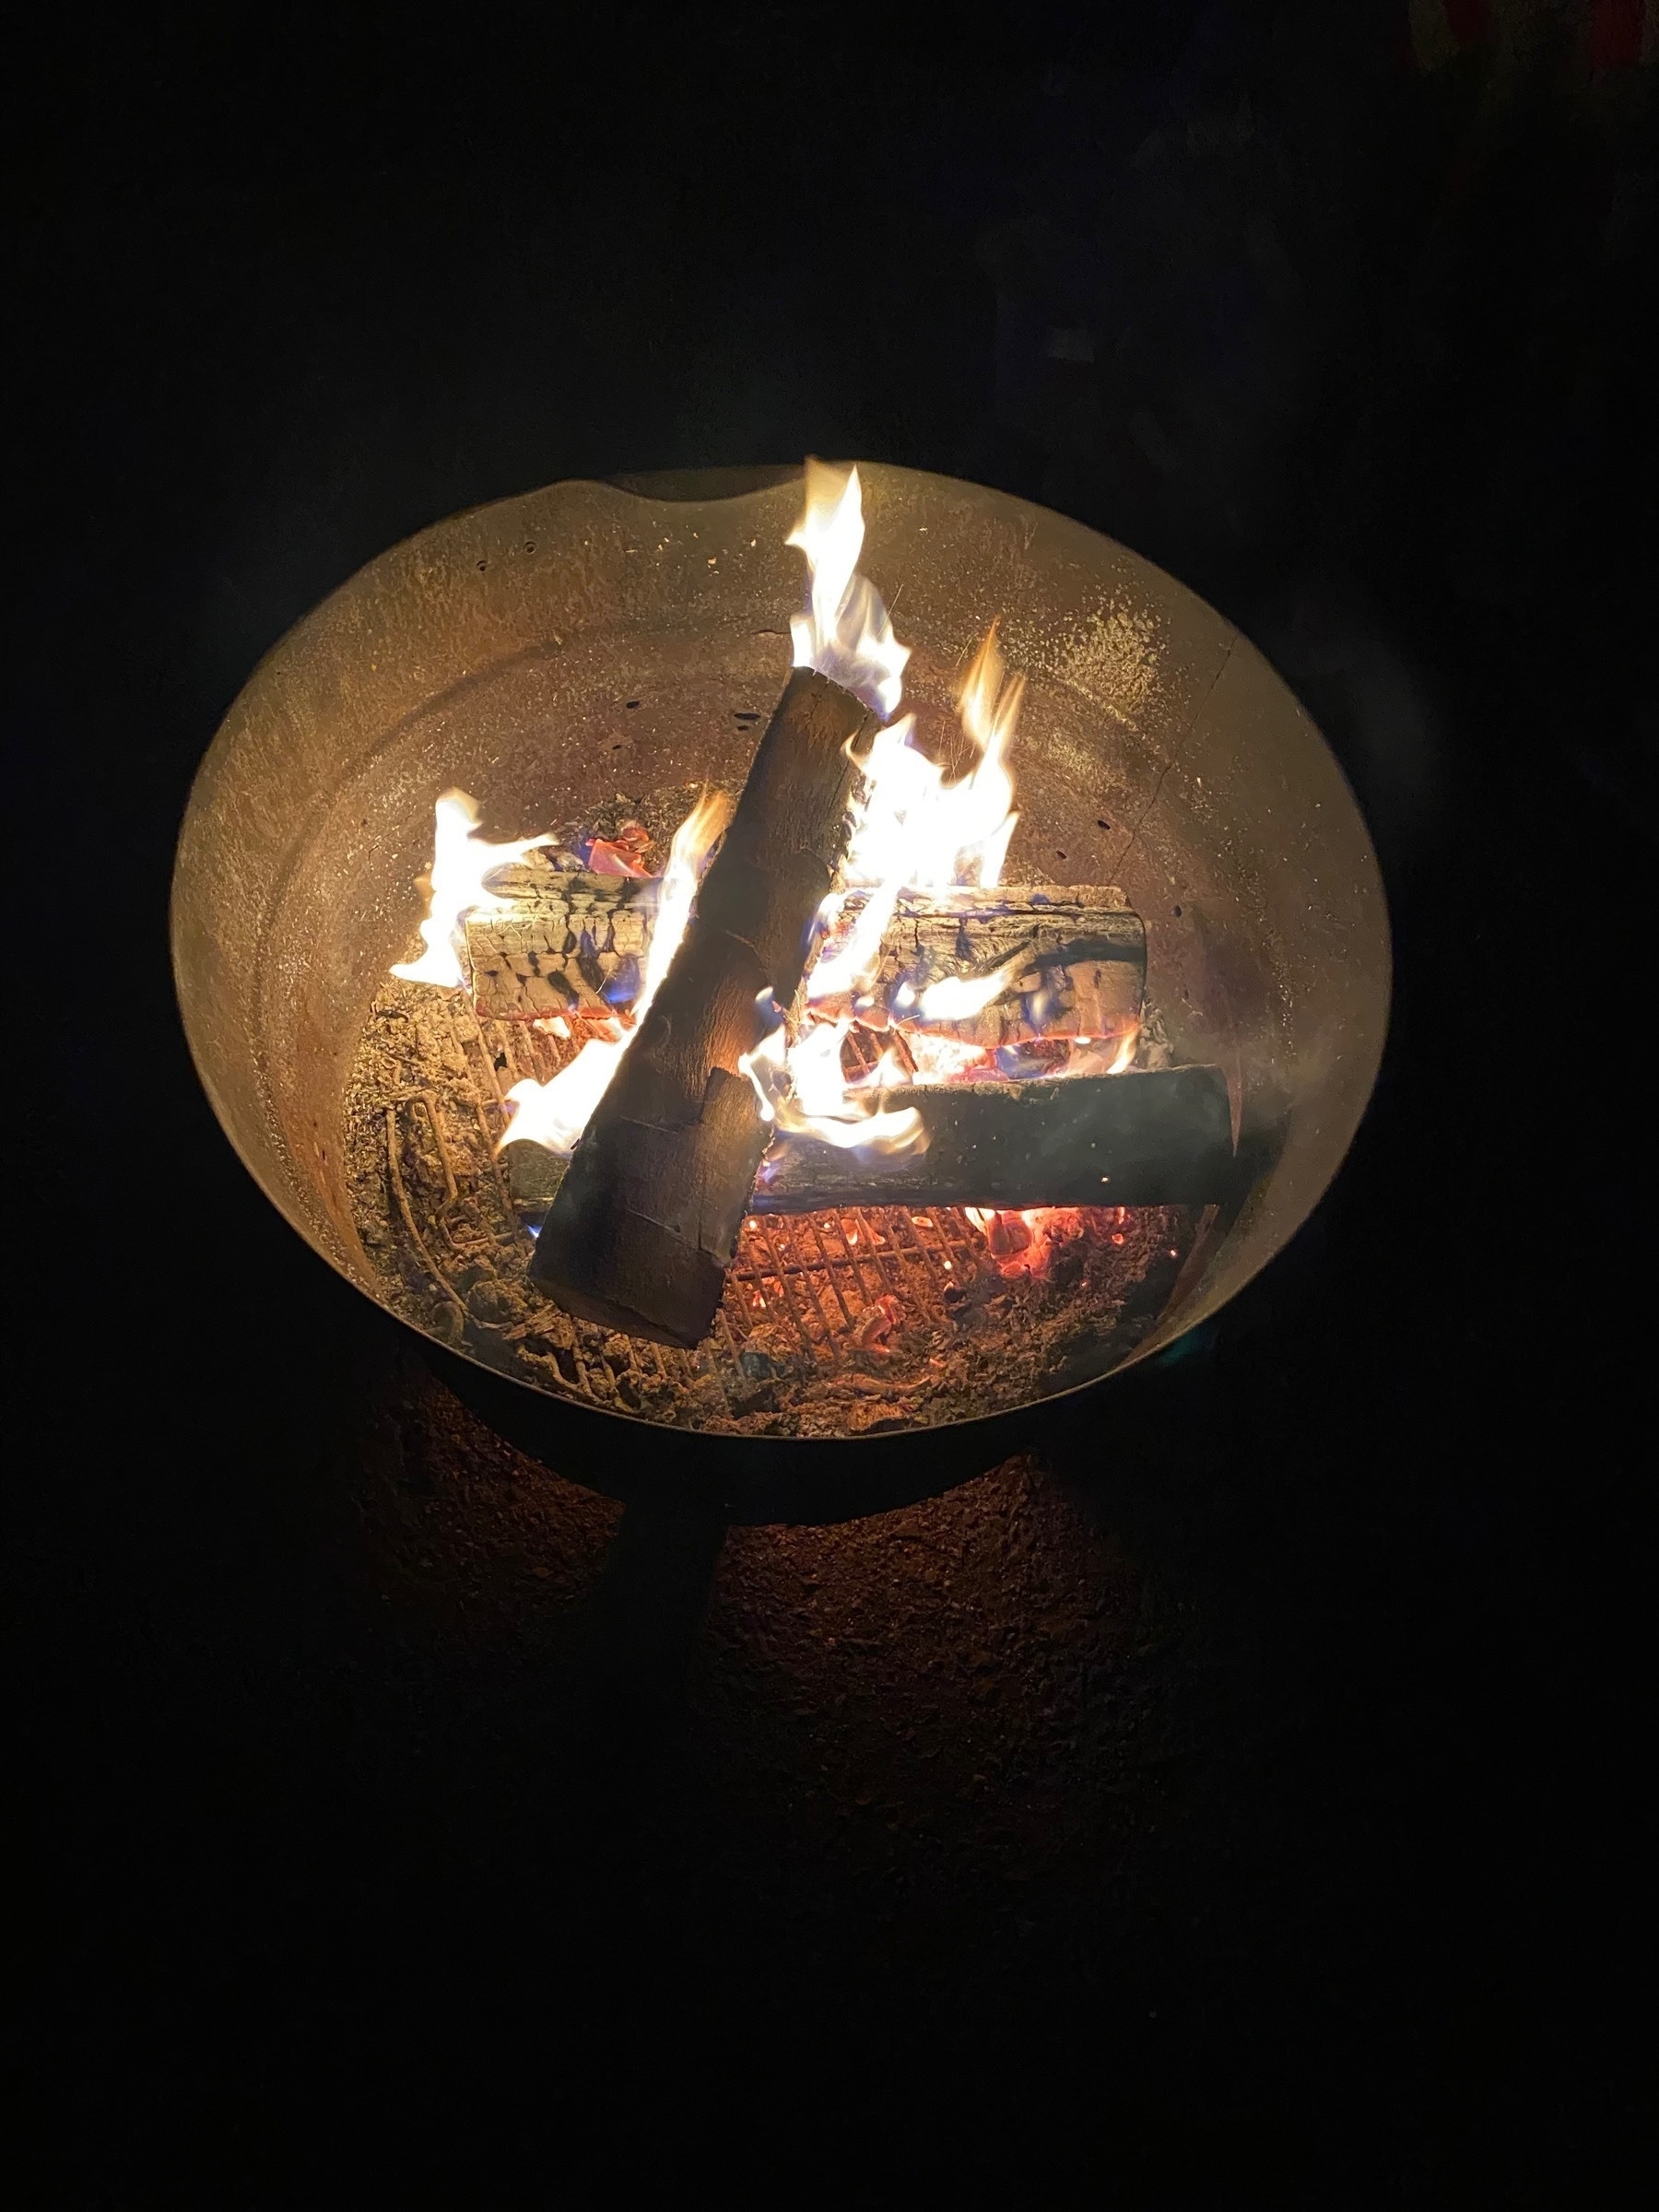 Logs burning in a large metal bucket.